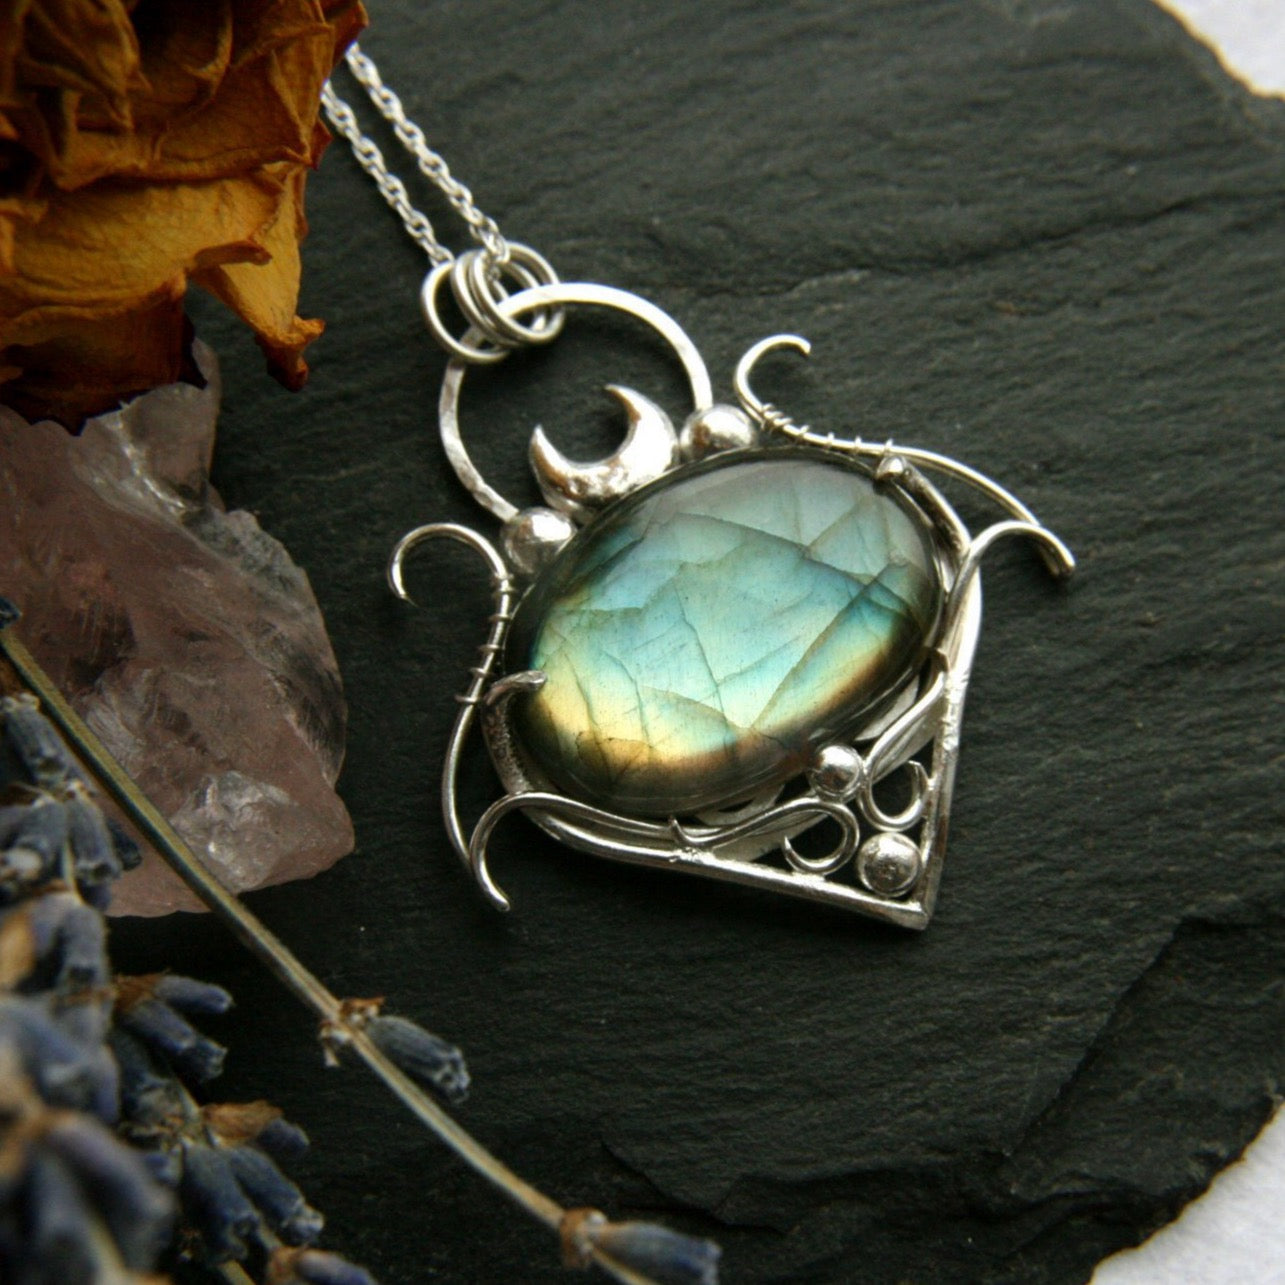 Hecate Moon Labradorite Necklace - Andune Jewellery